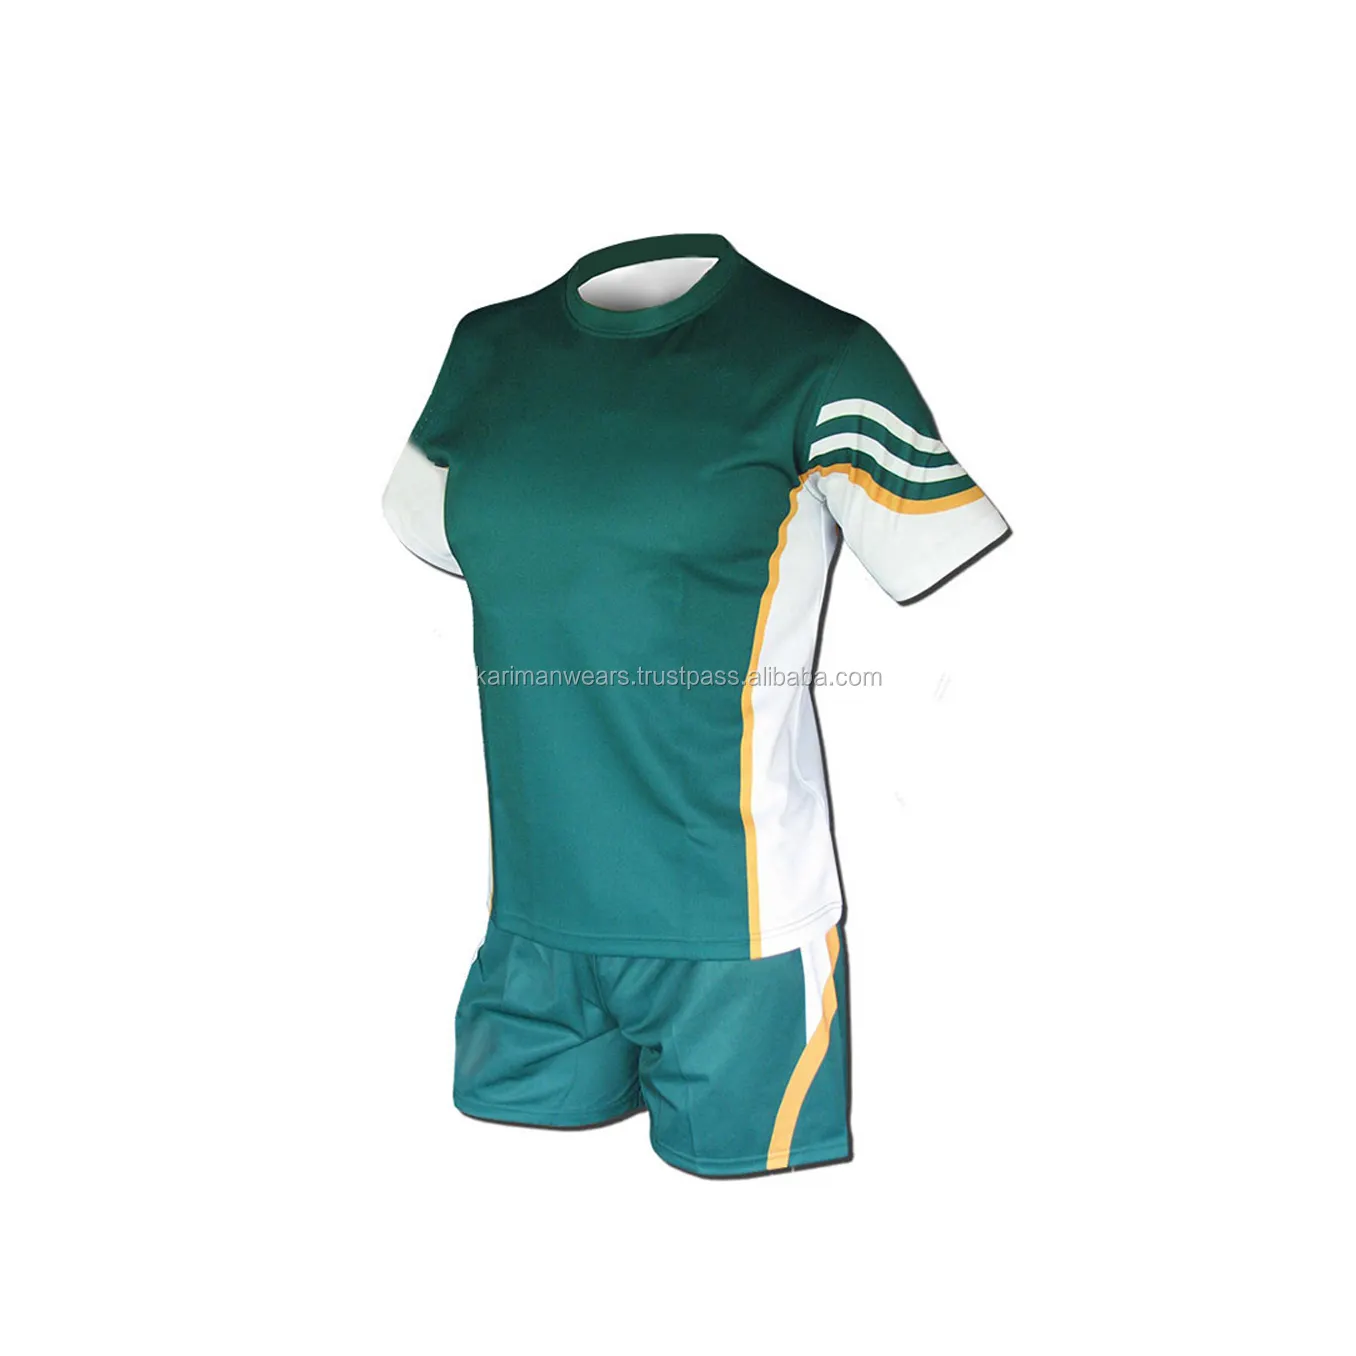 Kaus Rugby dan Celana Pendek Kustom Kemeja Rugby Pemasok OEM 2019 Sublimasi Cetak Uniseks Sesuai Pesanan Logo Sepak Bola